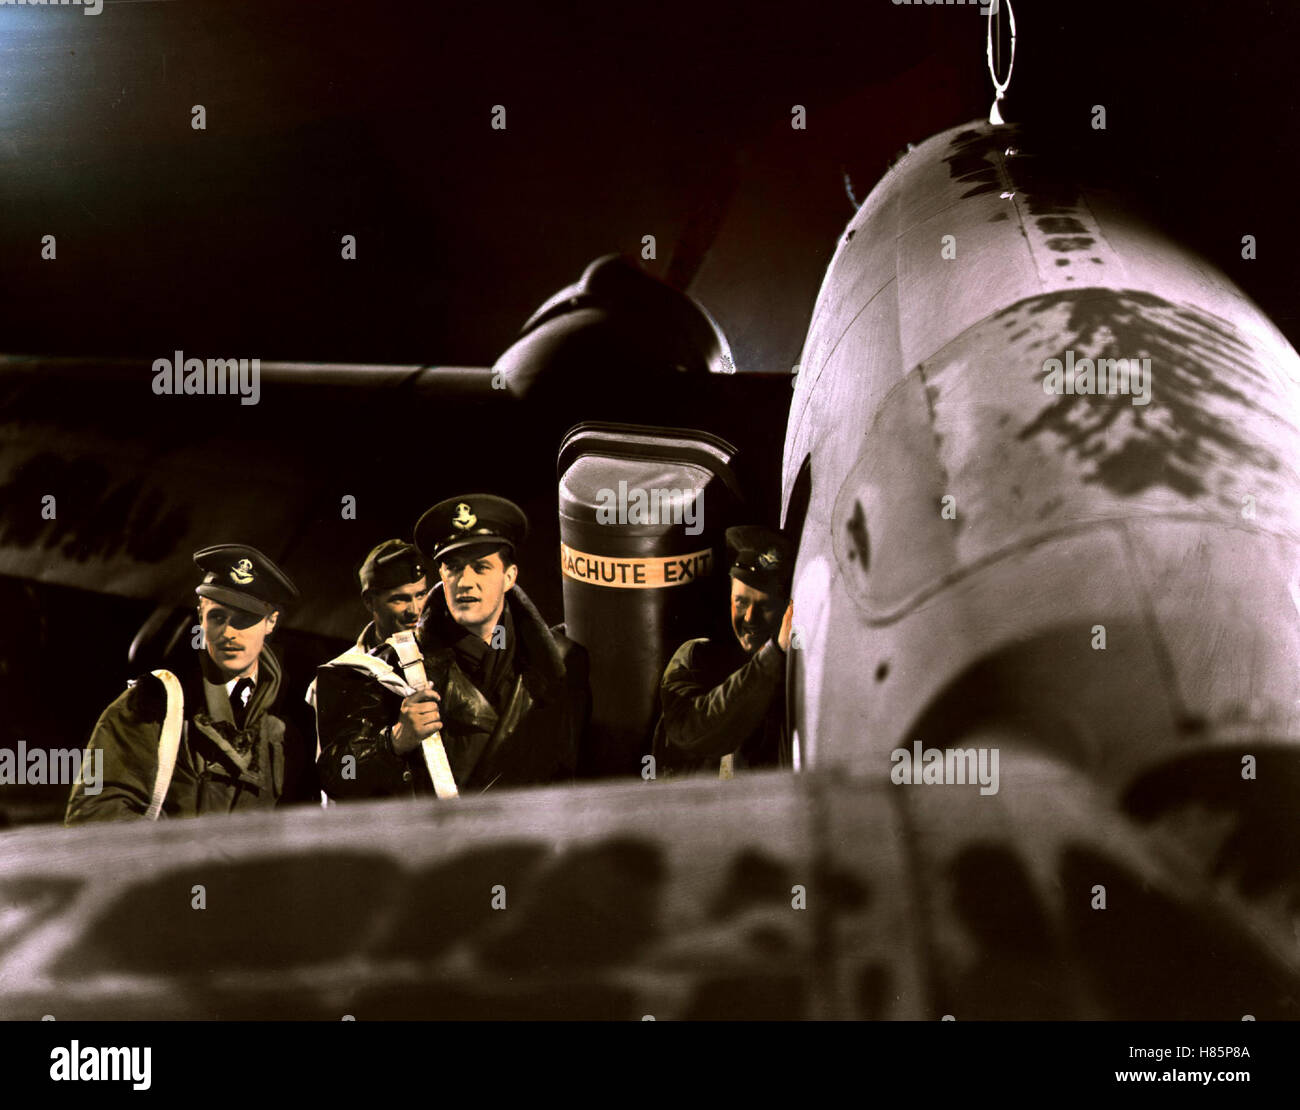 Helden der Lüfte, (capitani di nuvole) USA 1942, Regie: Michael Curtiz, DENNIS MORGAN (3.vl) + James Cagney (re) Stichwort: Flugzeug, uniforme Foto Stock